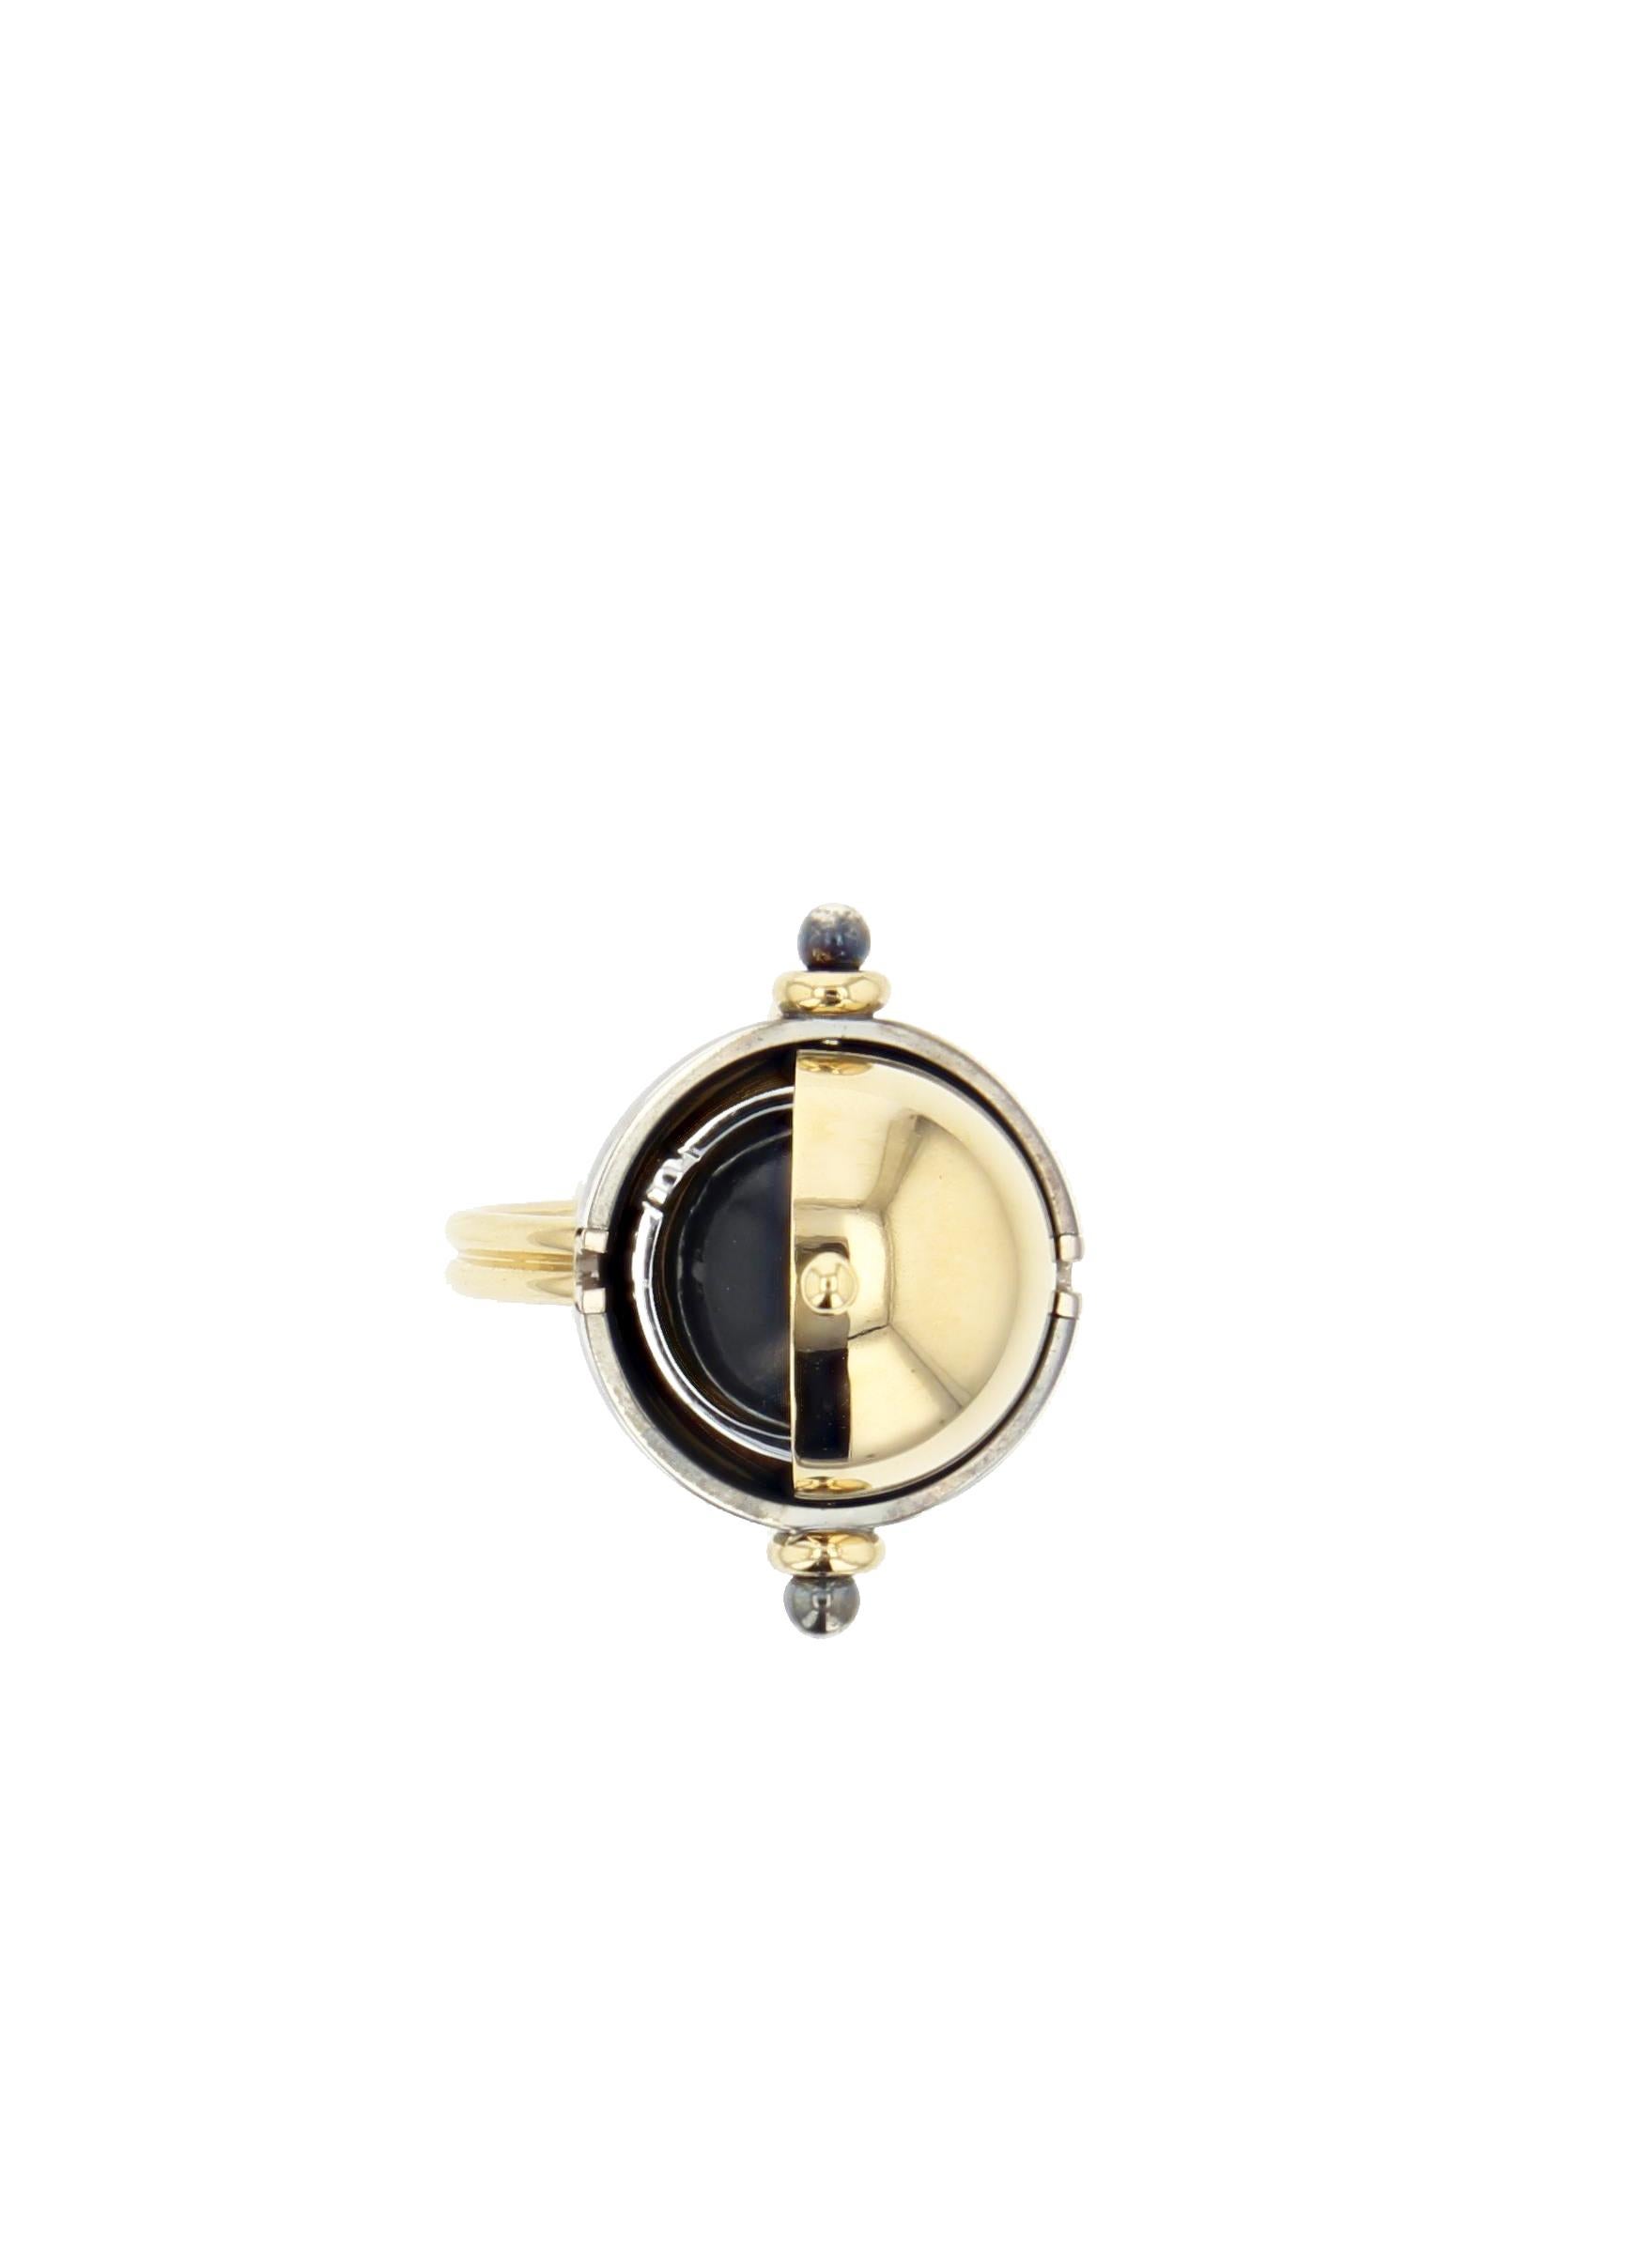 Women's Labradorite Diamond Sphere Ring in 18k yellow gold by Elie Top